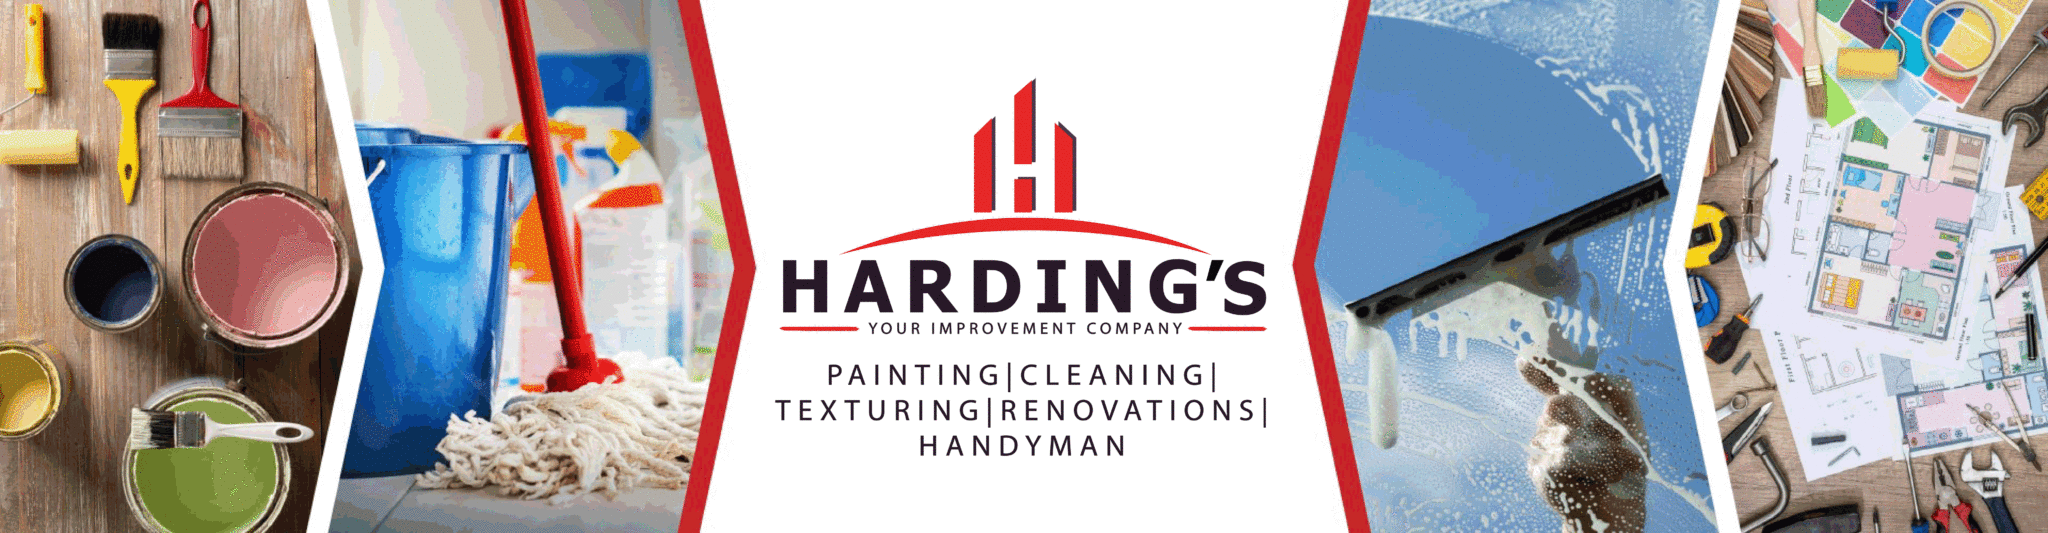 Harding's Services Calgary